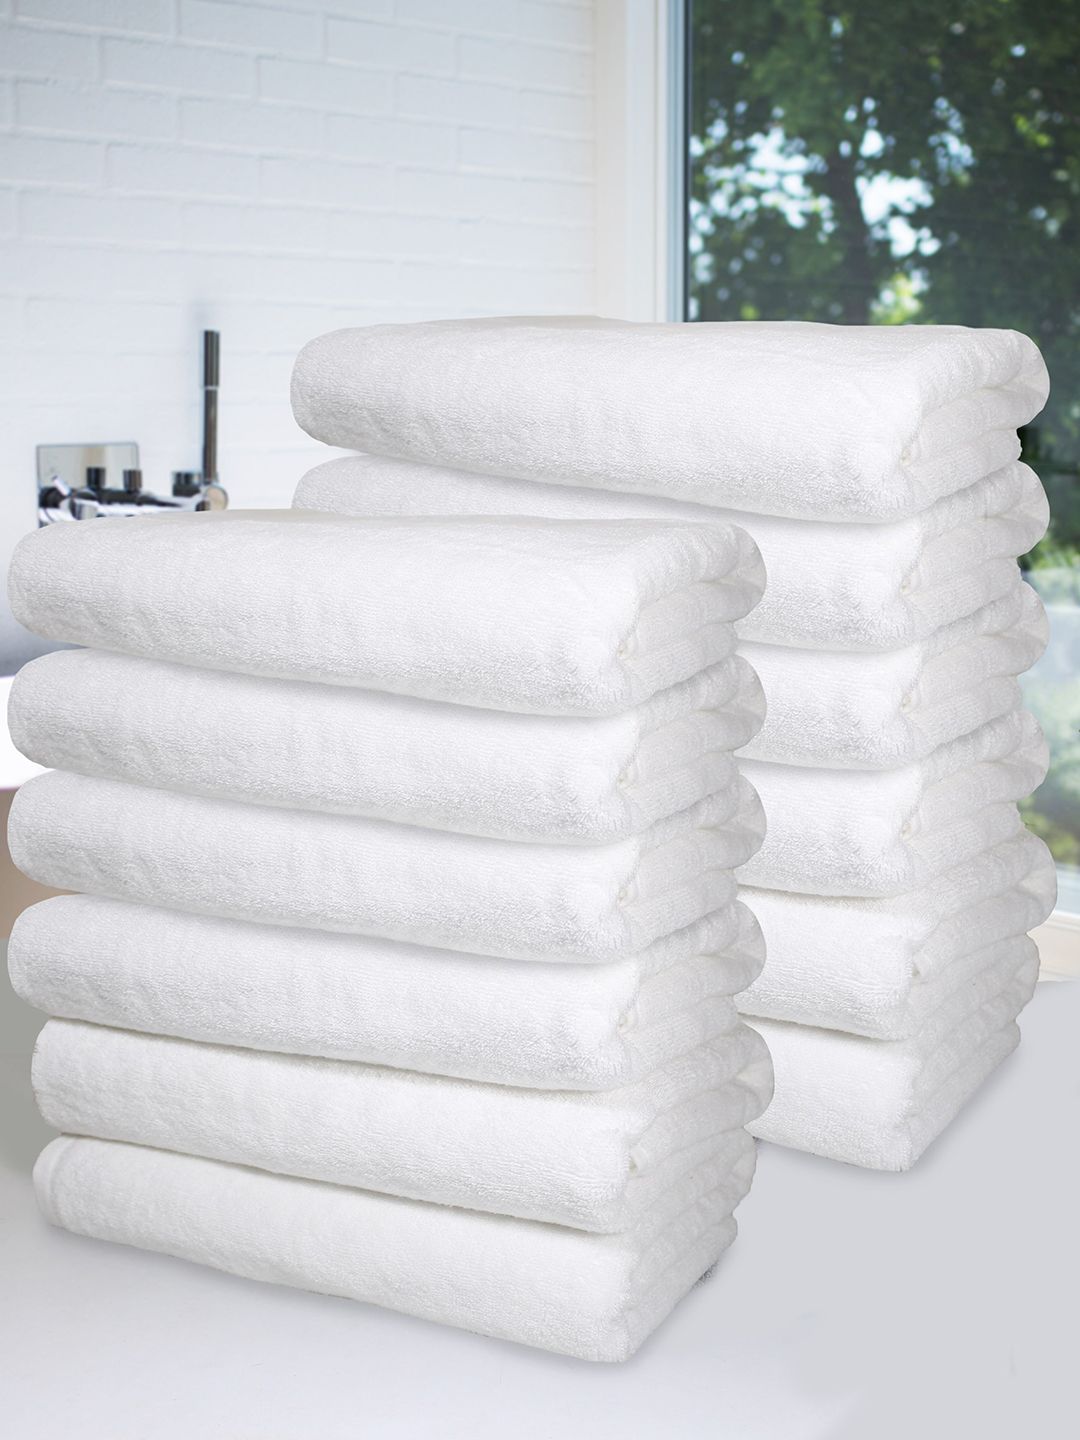 Heelium Set Of 12 White Solid 600 GSM Bamboo Bath Towels Price in India